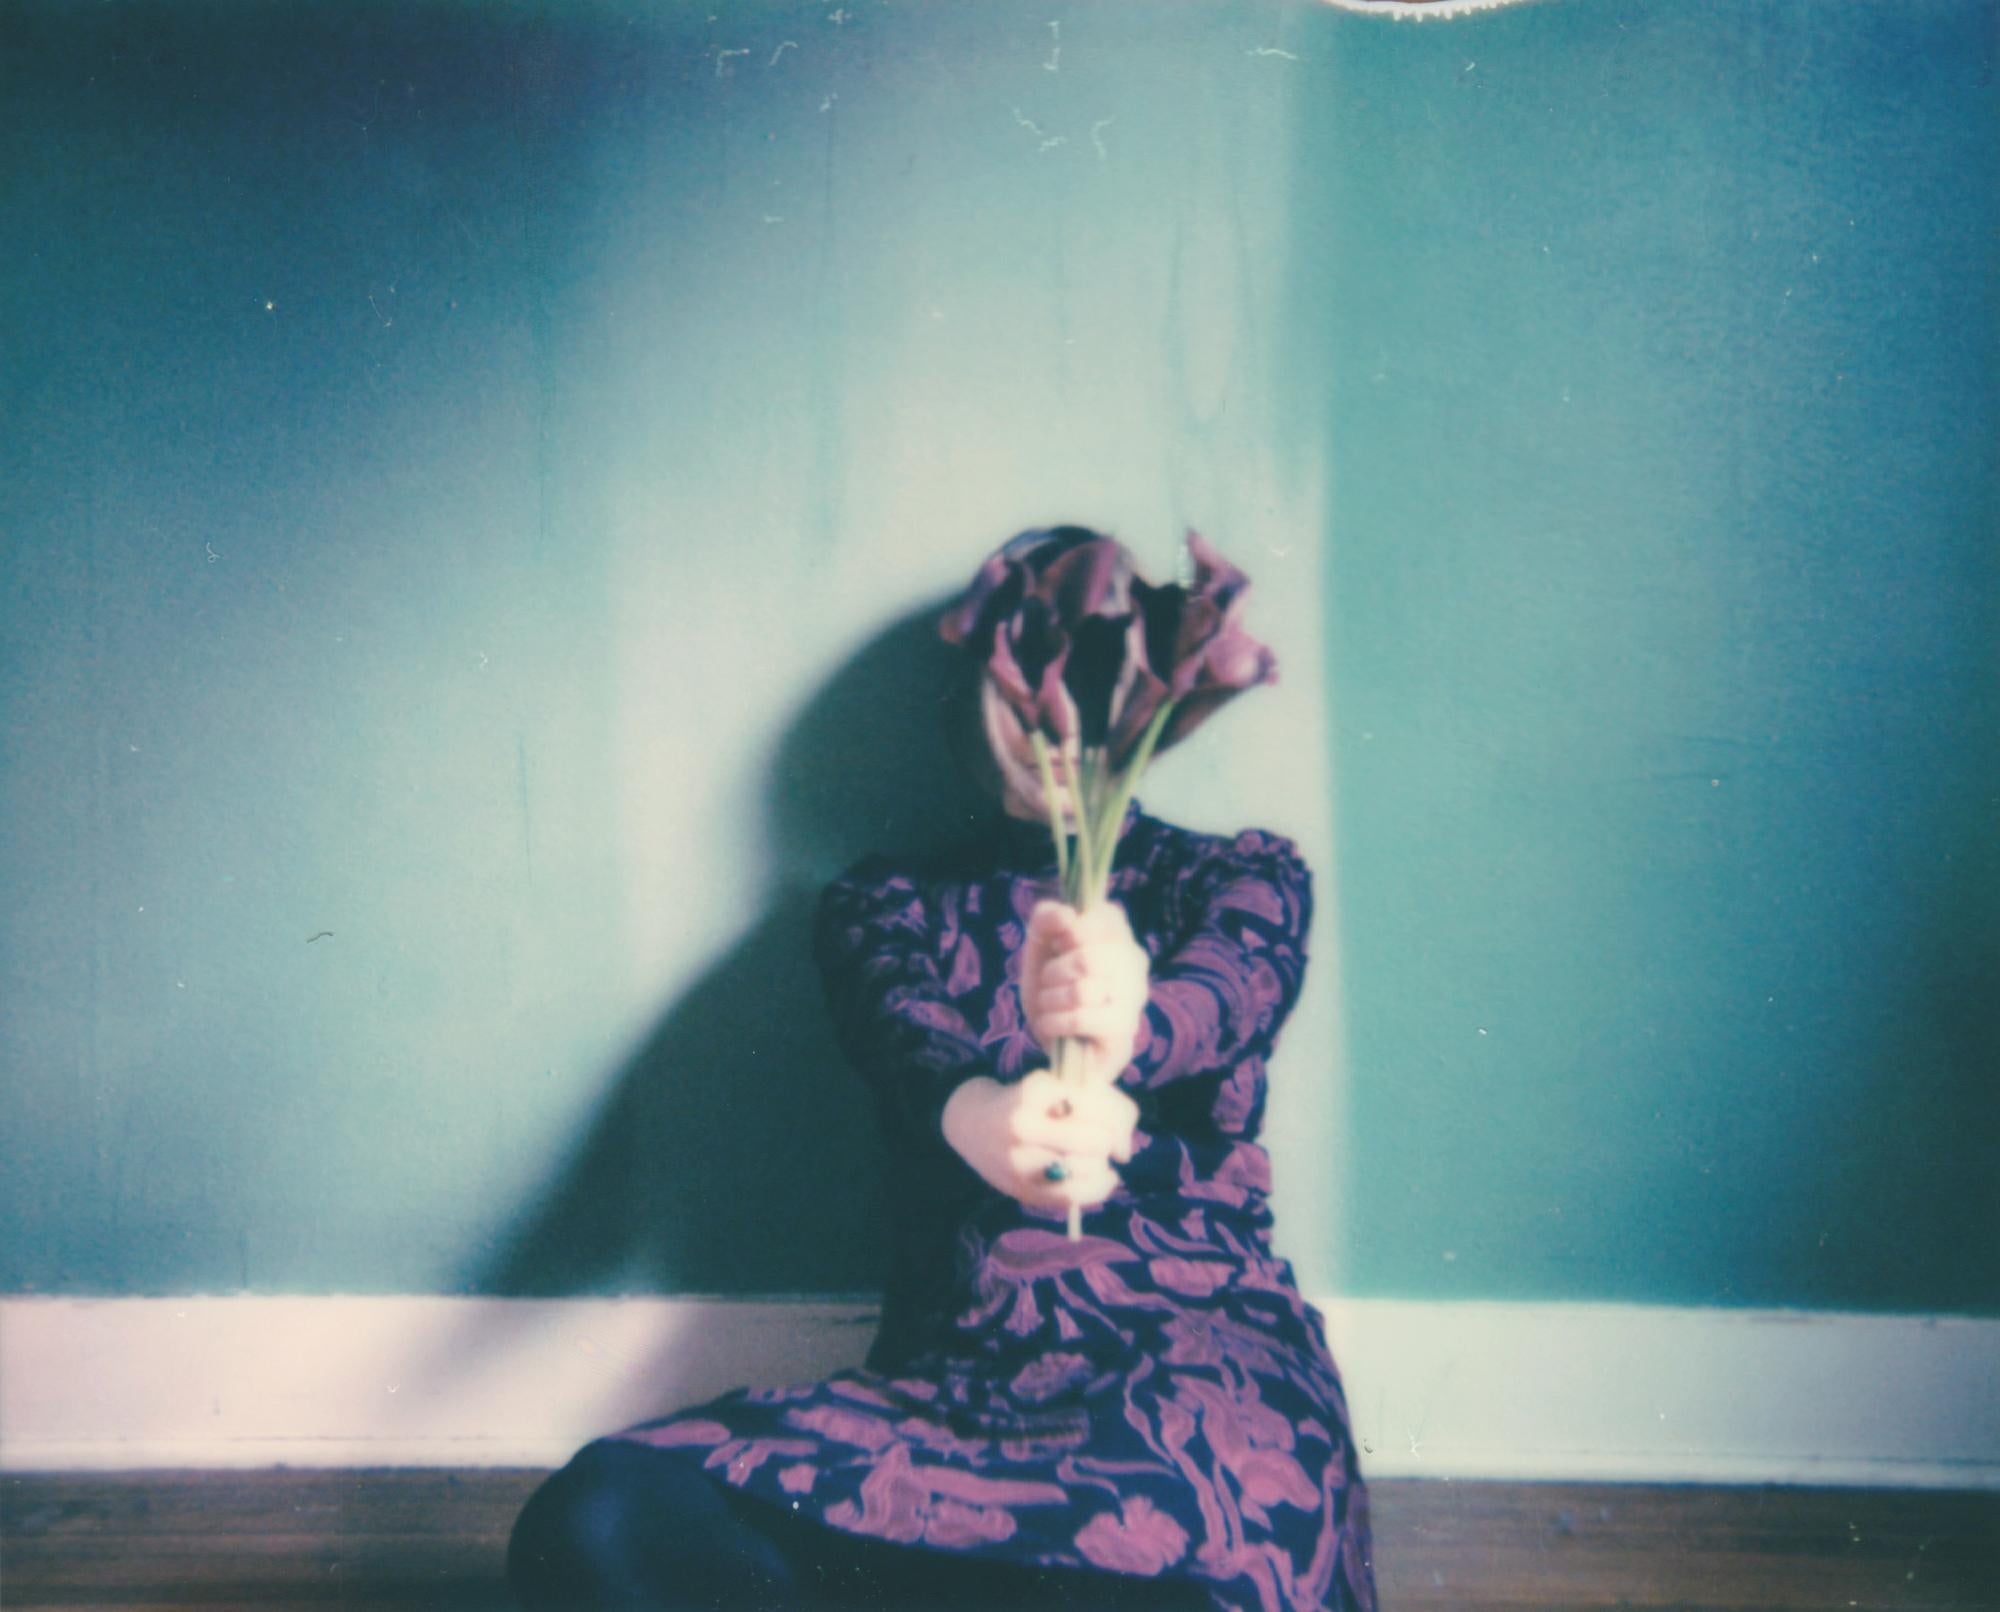 Color Photograph Lisa Toboz - In Bloom - Contemporain, Femme, Polaroid